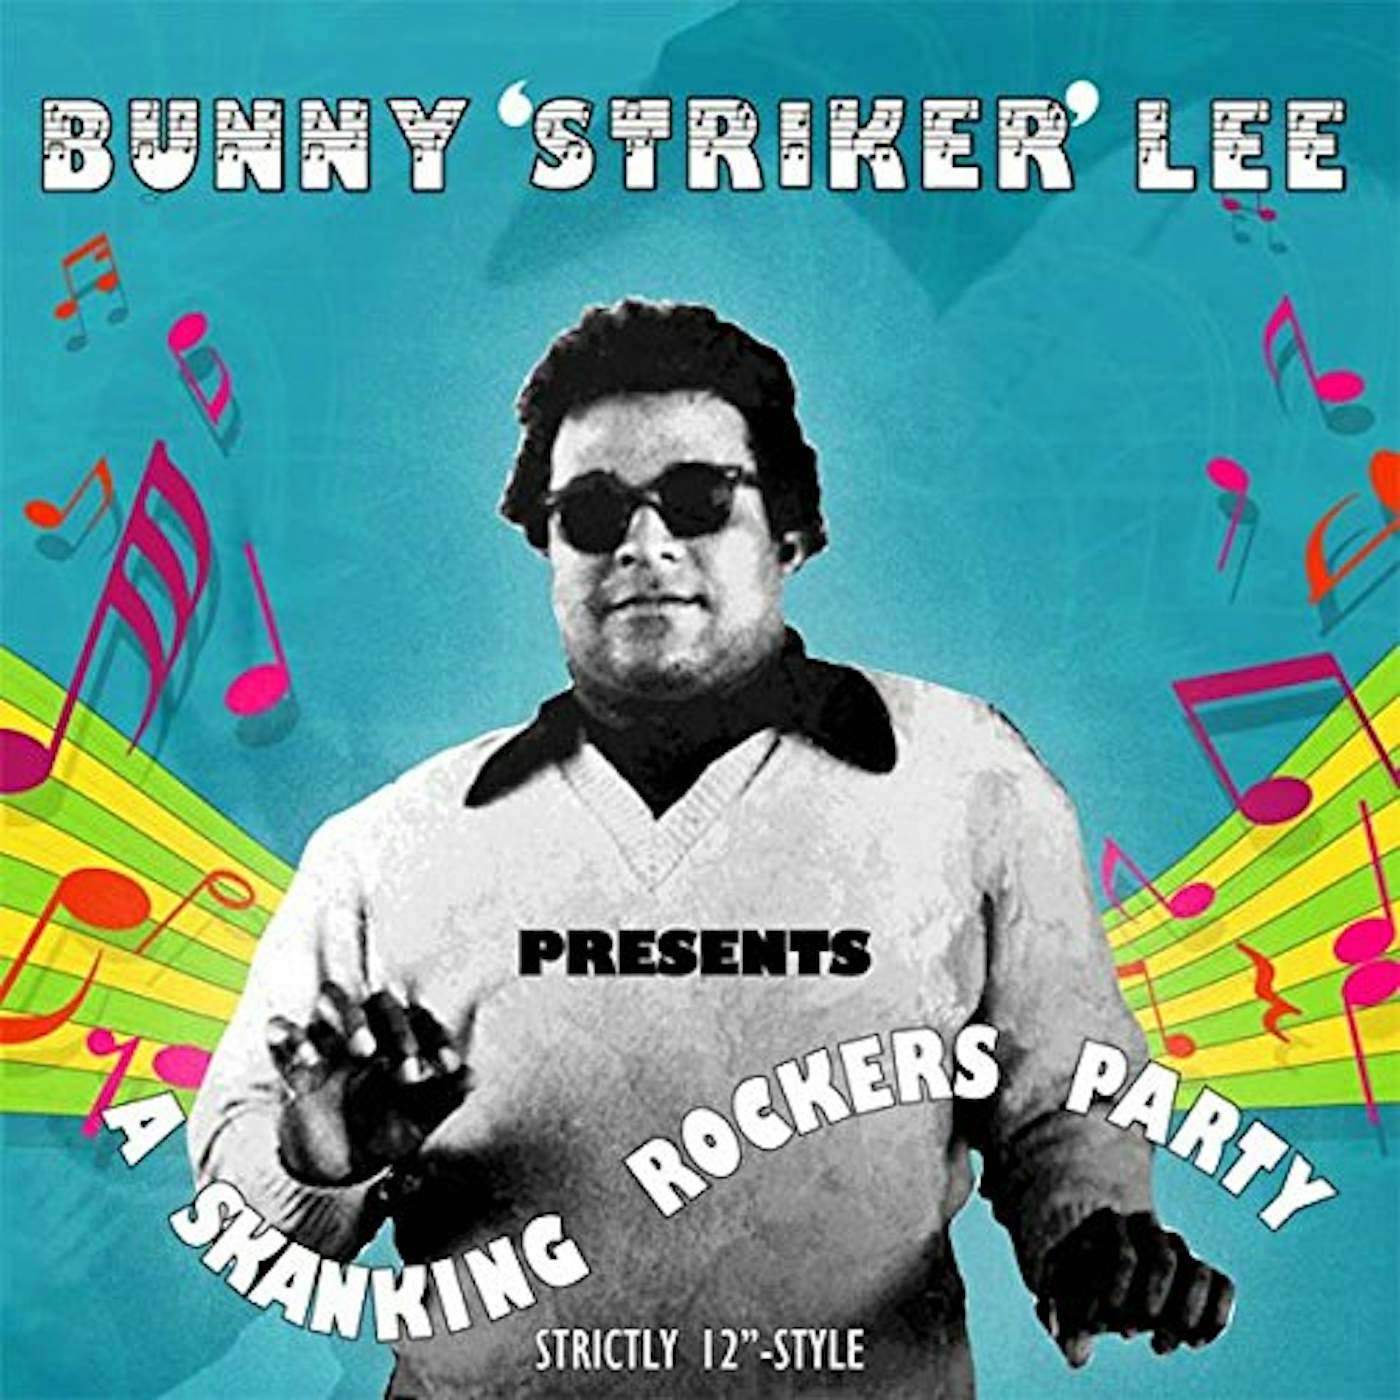 Bunny Striker Lee SKANKING ROCKERS PARTY Vinyl Record